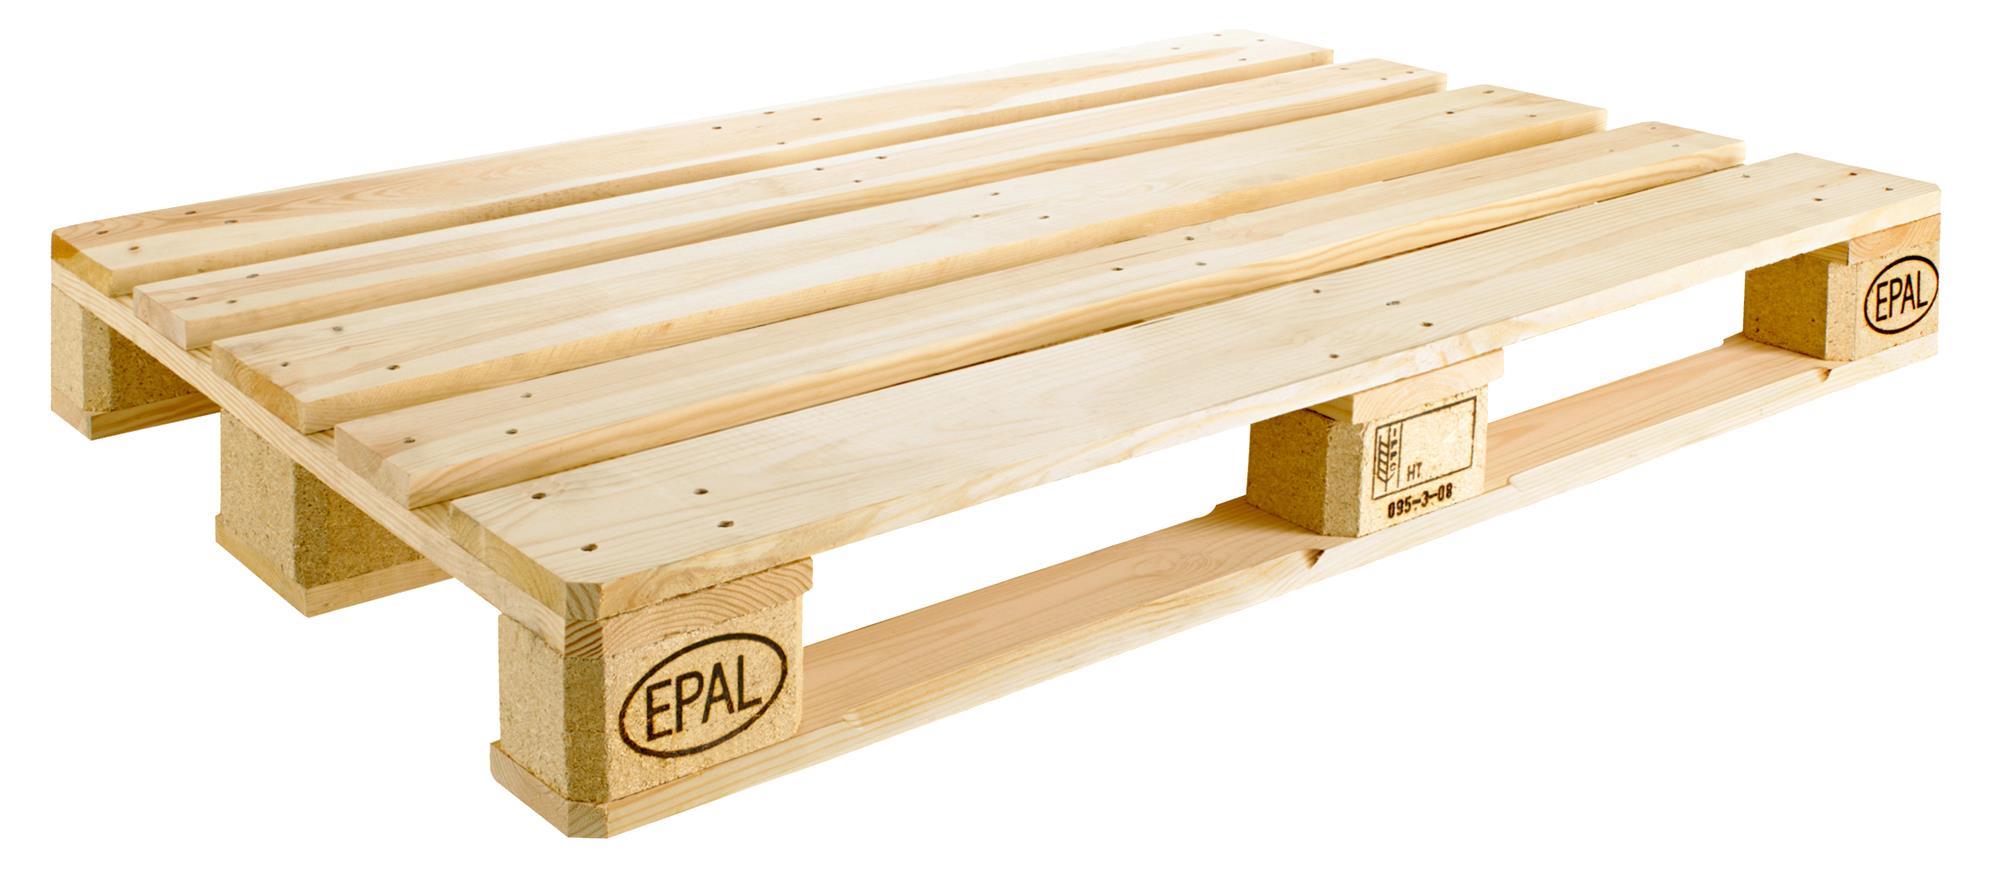 Europalette EPAL - Produits